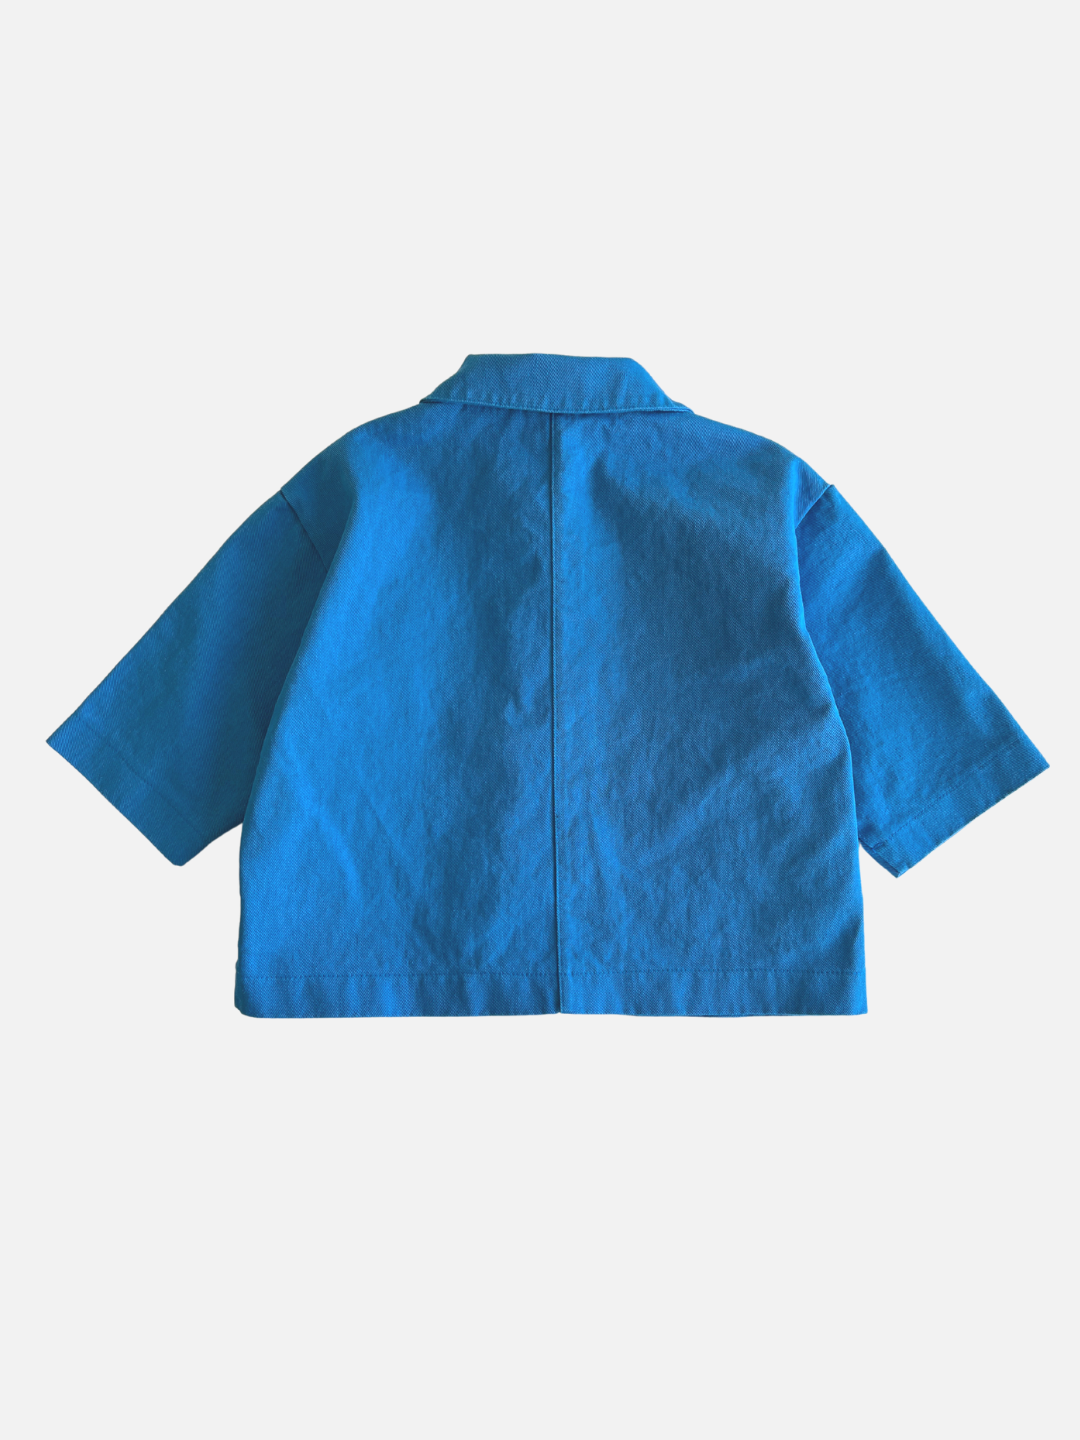 A kids' jacket in sky blue, back view